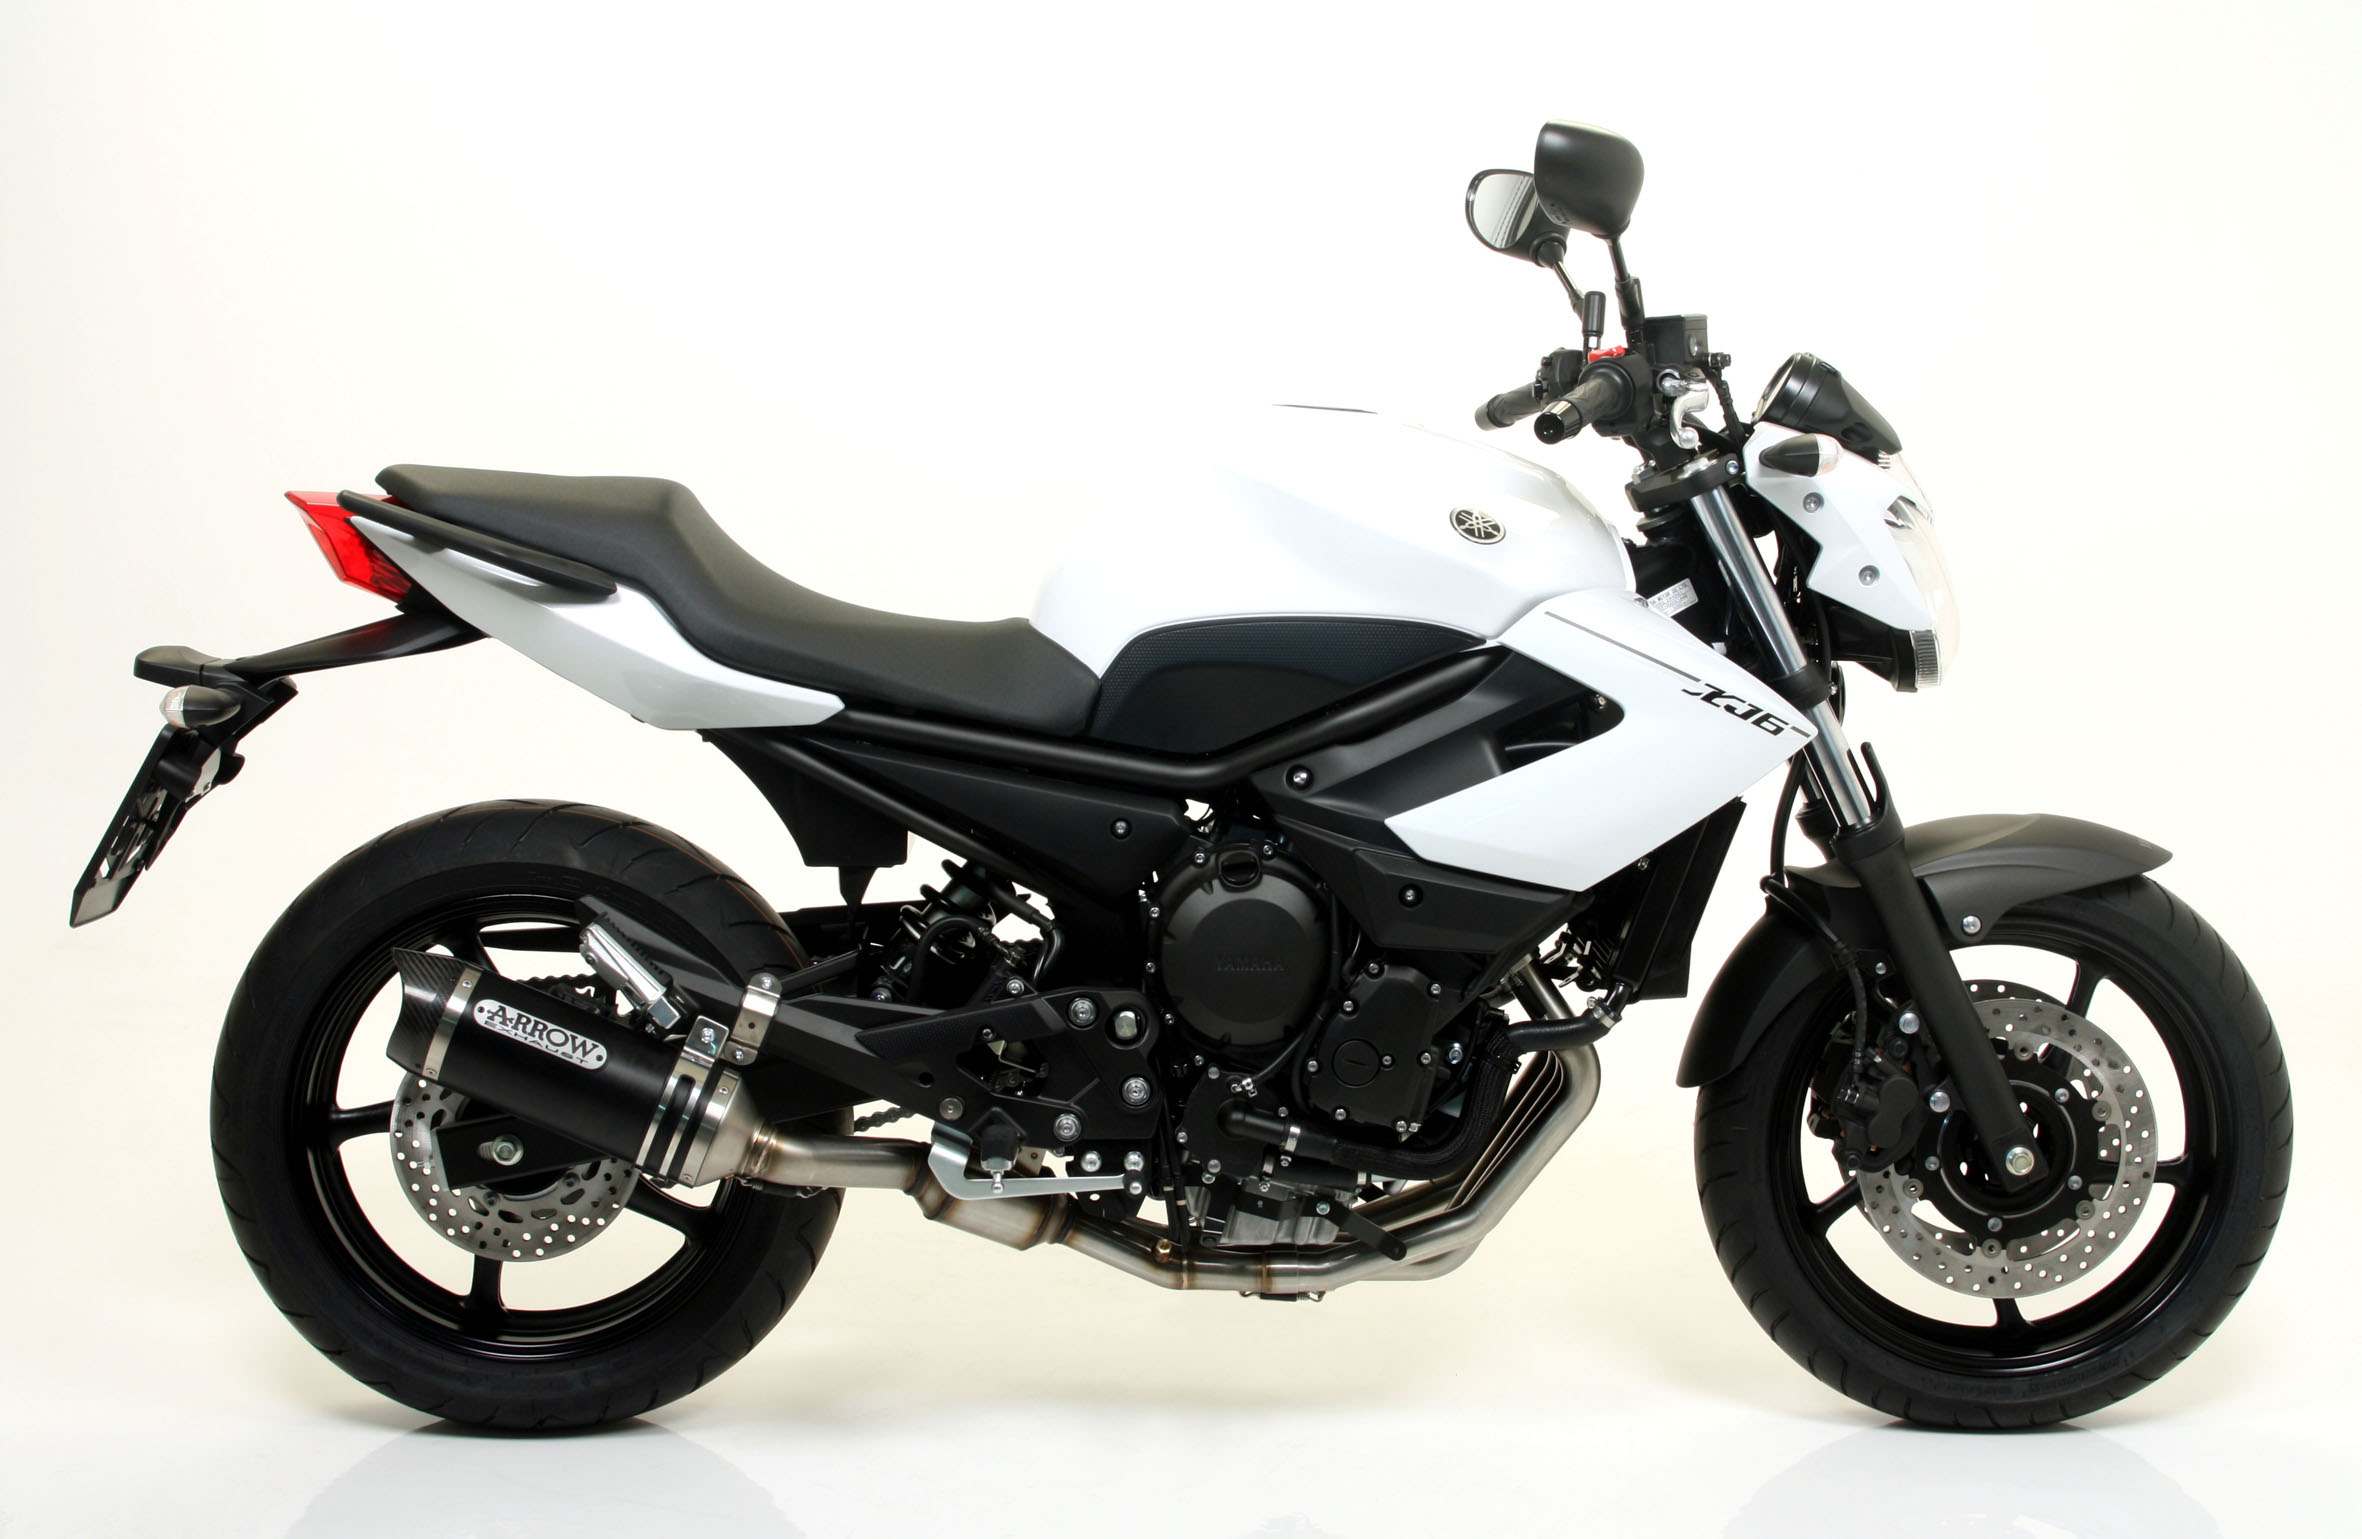 Arrow Street Thunder Aluminium Black Carby Endcap met E-keur incl. RVS Voorbochten met Katalysator Yamaha XJ6 / Diversion 2009 > 2015